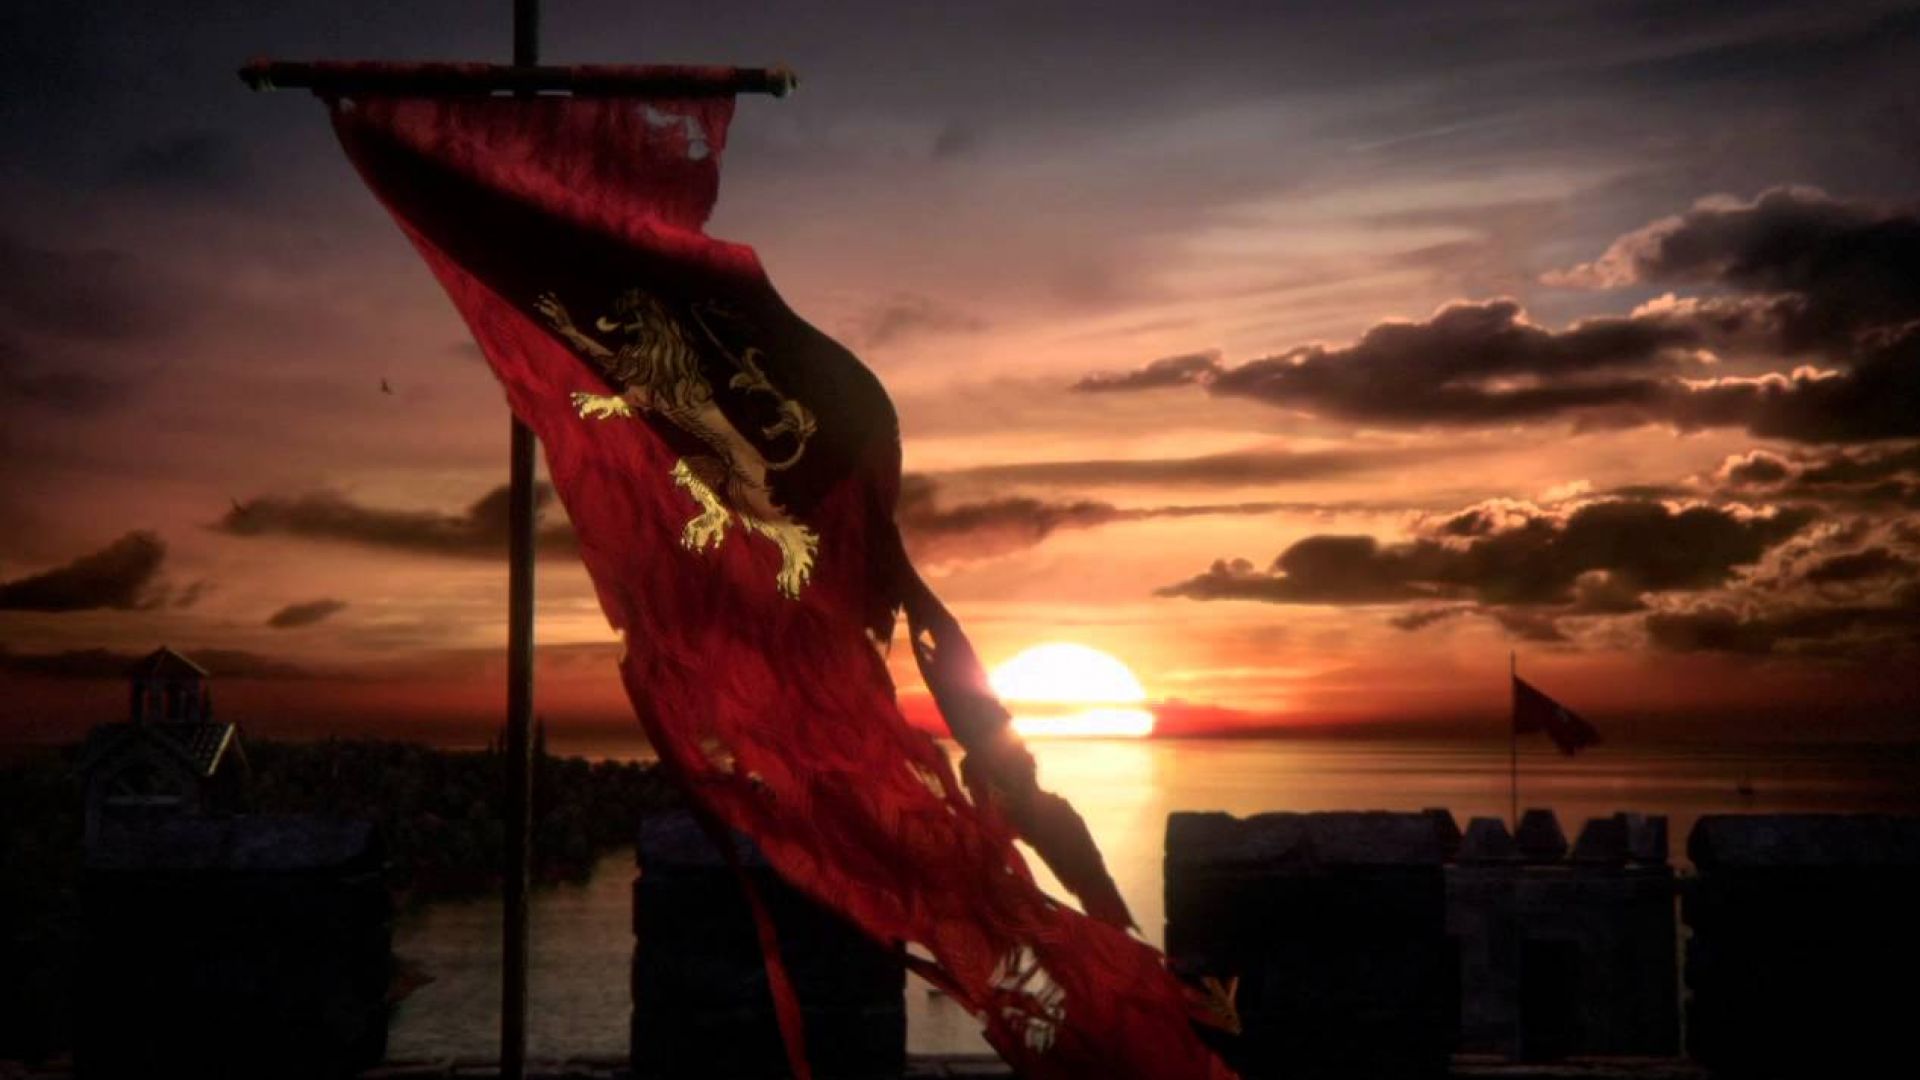 Game Of Thrones Season 6: Lannister Battle Banner Tease 